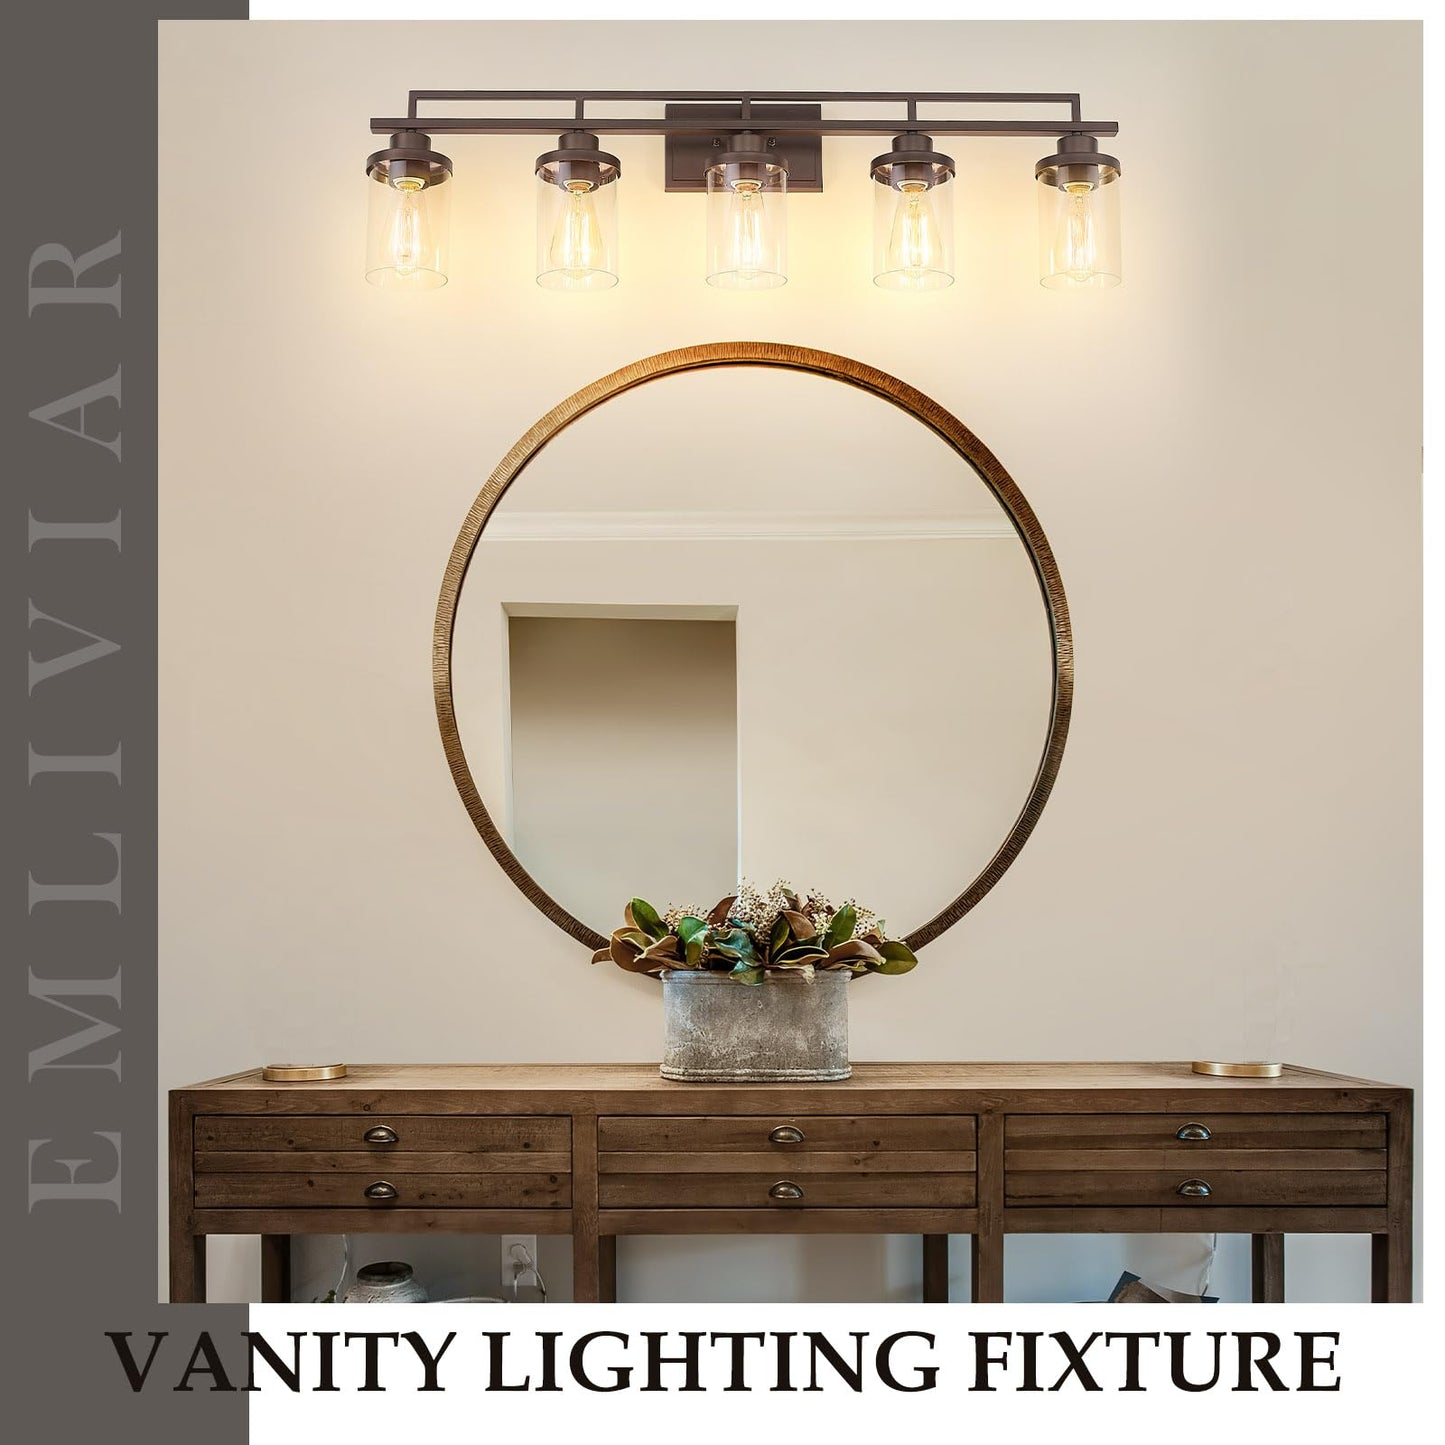 
                  
                    Emliviar 5-Light Rustic Vanity Light Fixture for Bathroom, 36" Farmhouse Bathroom Wall Lighting, Oil Rubbed Bronze Finish with Clear Glass, YCE238B-5W ORB
                  
                